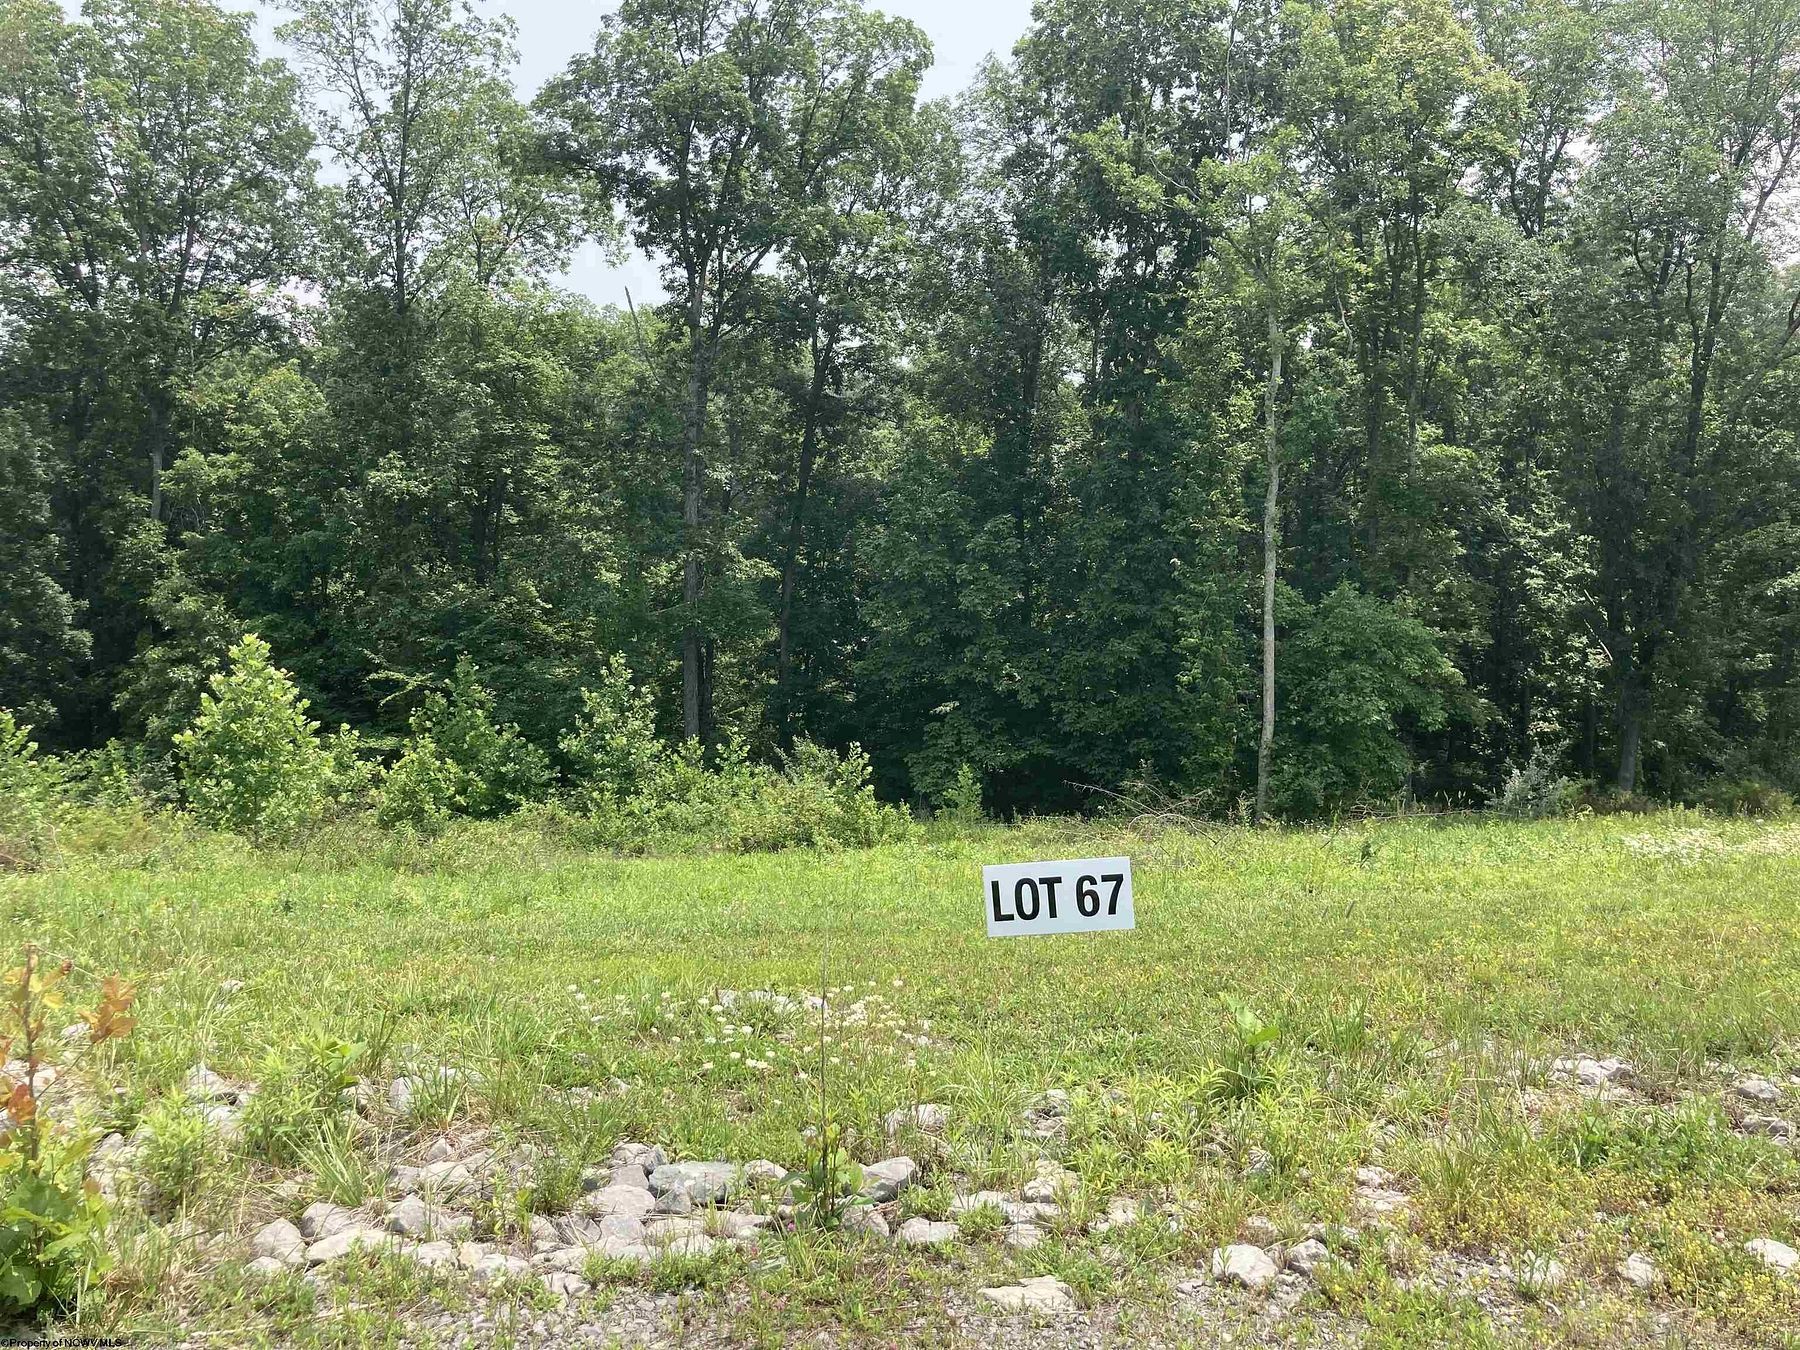 0.47 Acres of Residential Land for Sale in Bridgeport, West Virginia